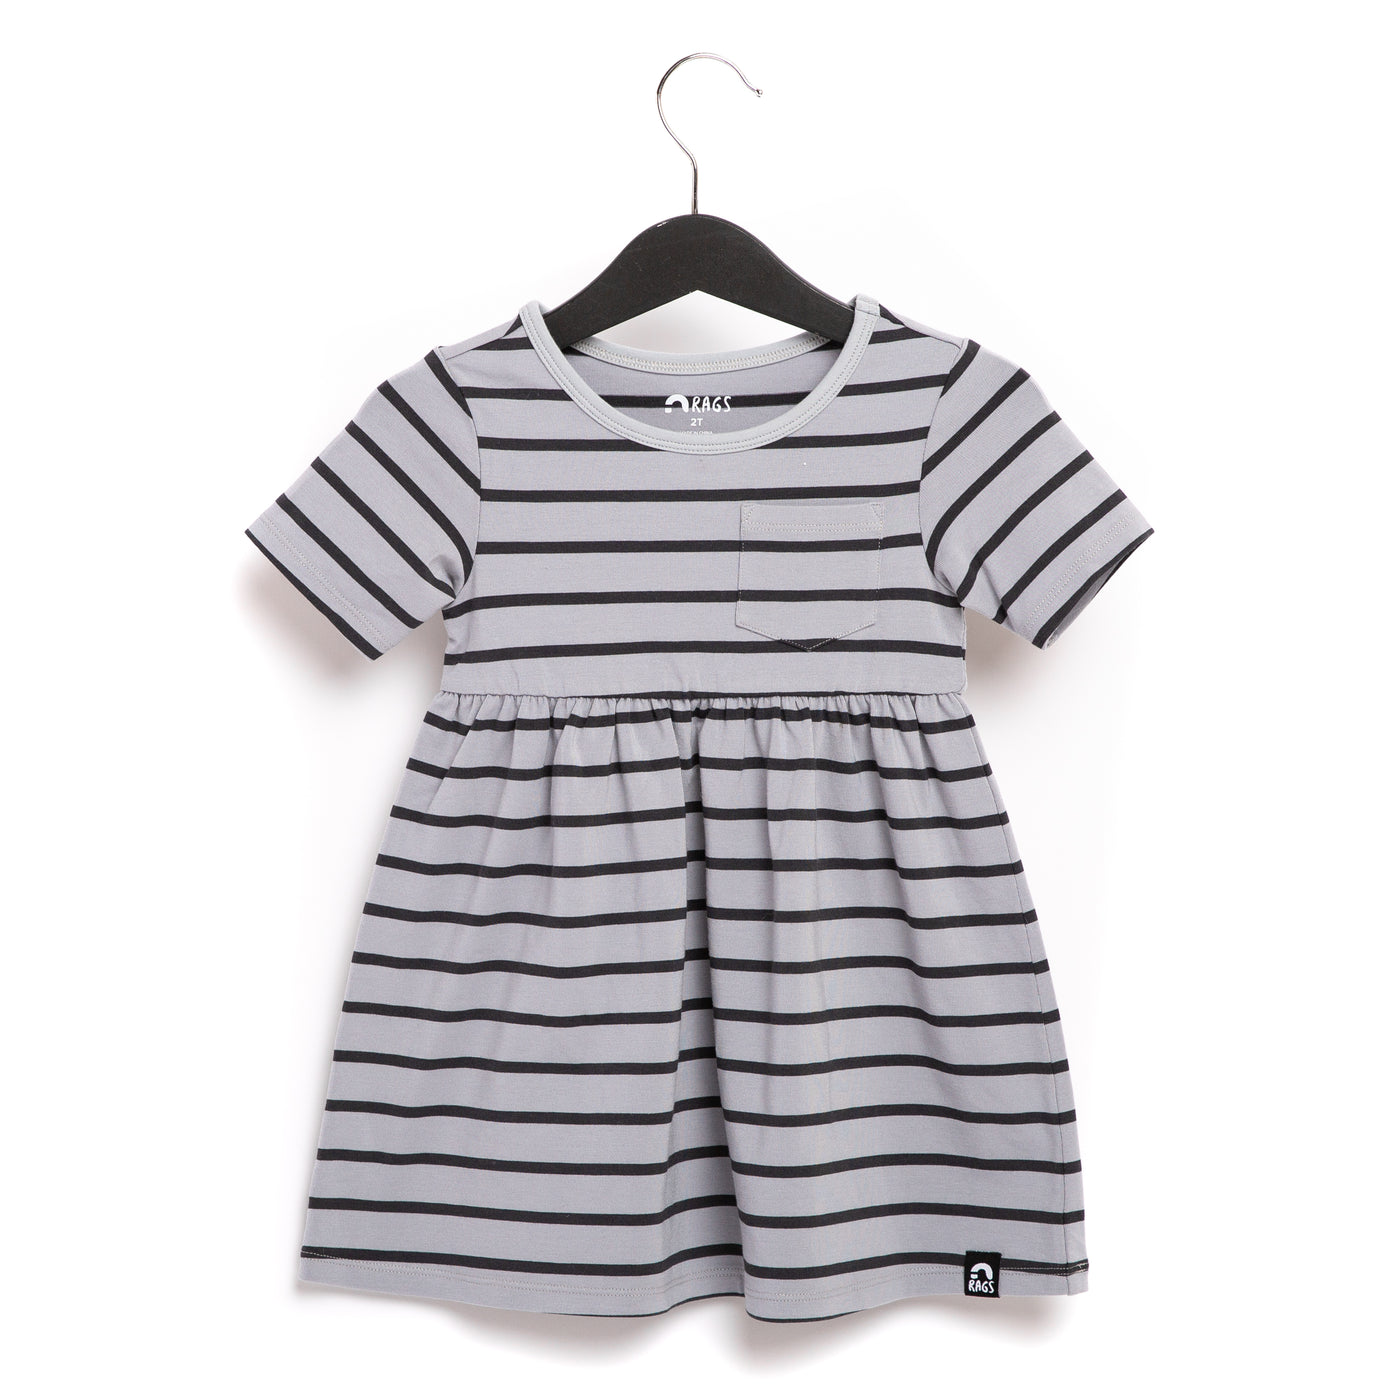 Essentials Short Sleeve with Chest Pocket Dress - 'Quarry Stripe'